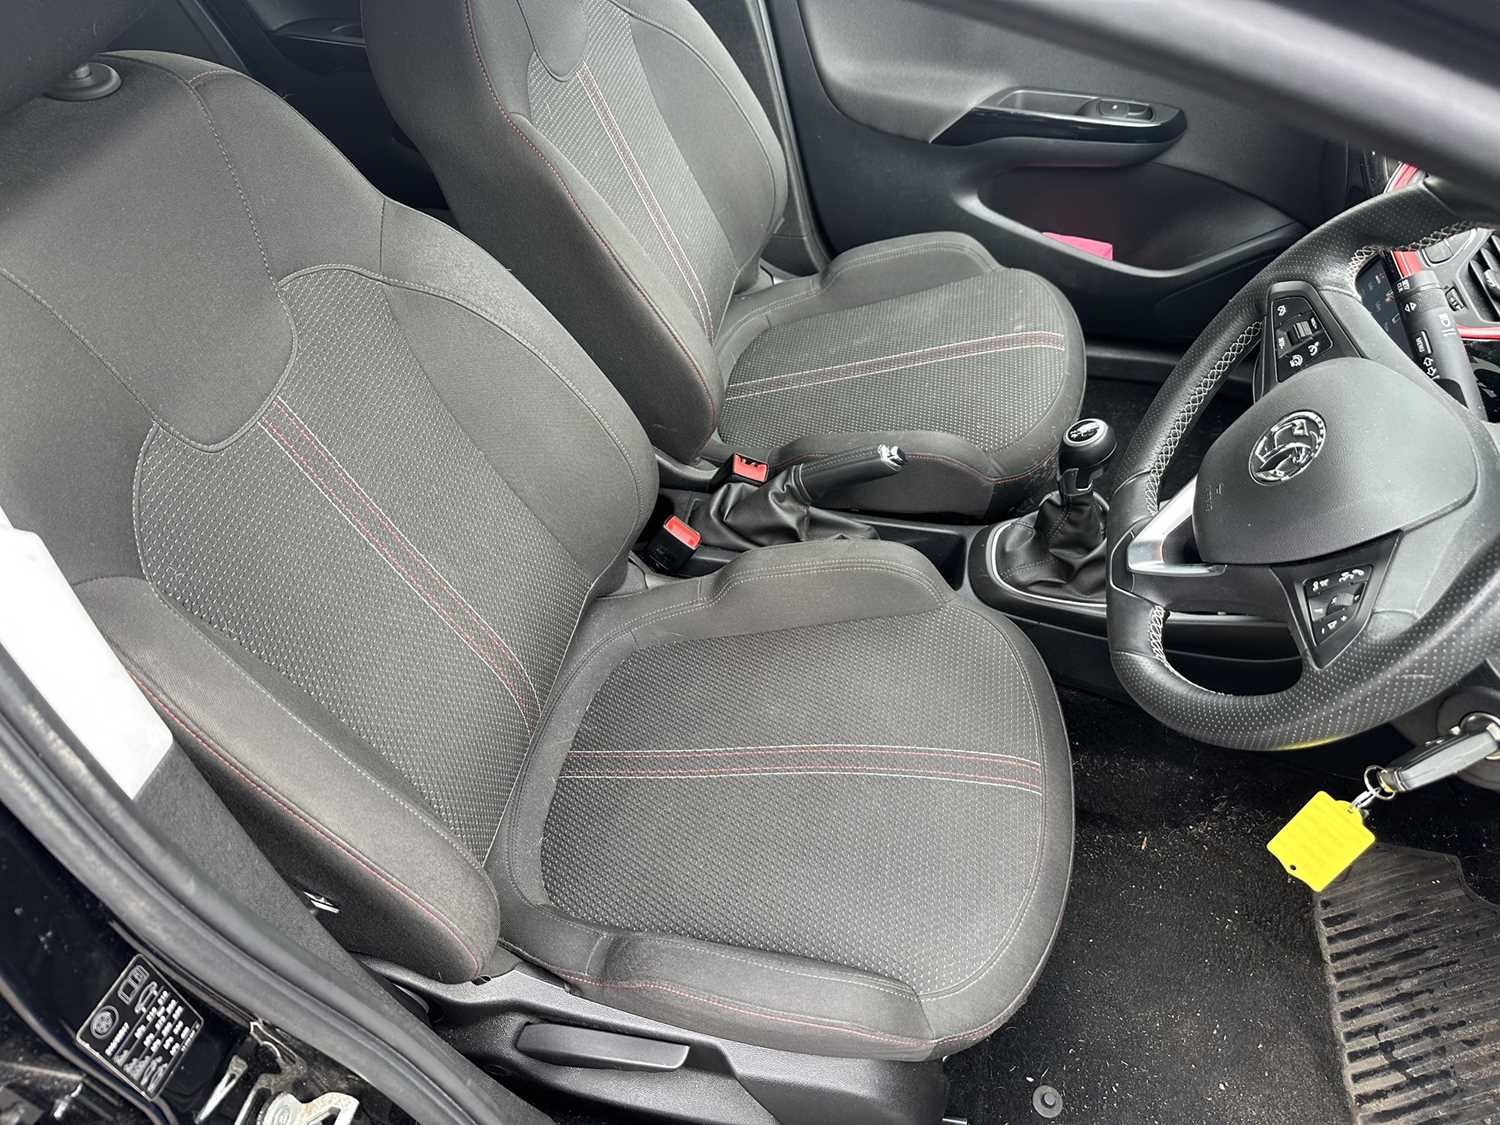 2019 Vauxhall Corsa SRI VX - Line Nav Black, 5 door hatchback, manual, reg. no. VU19 RYK - Image 11 of 15